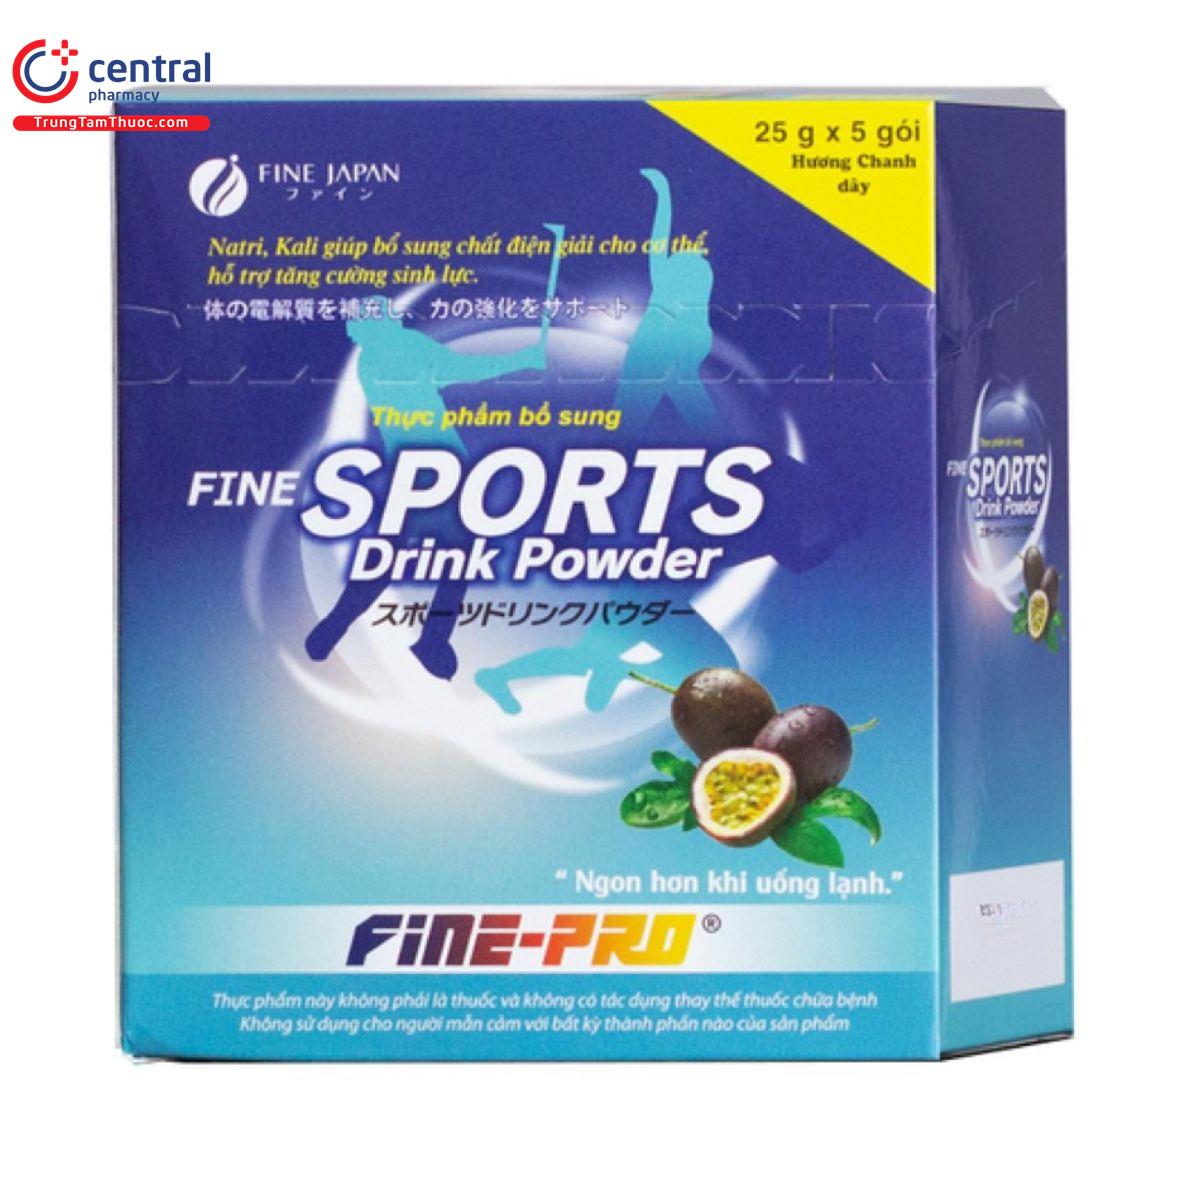 fine sports drink powder 7 F2143